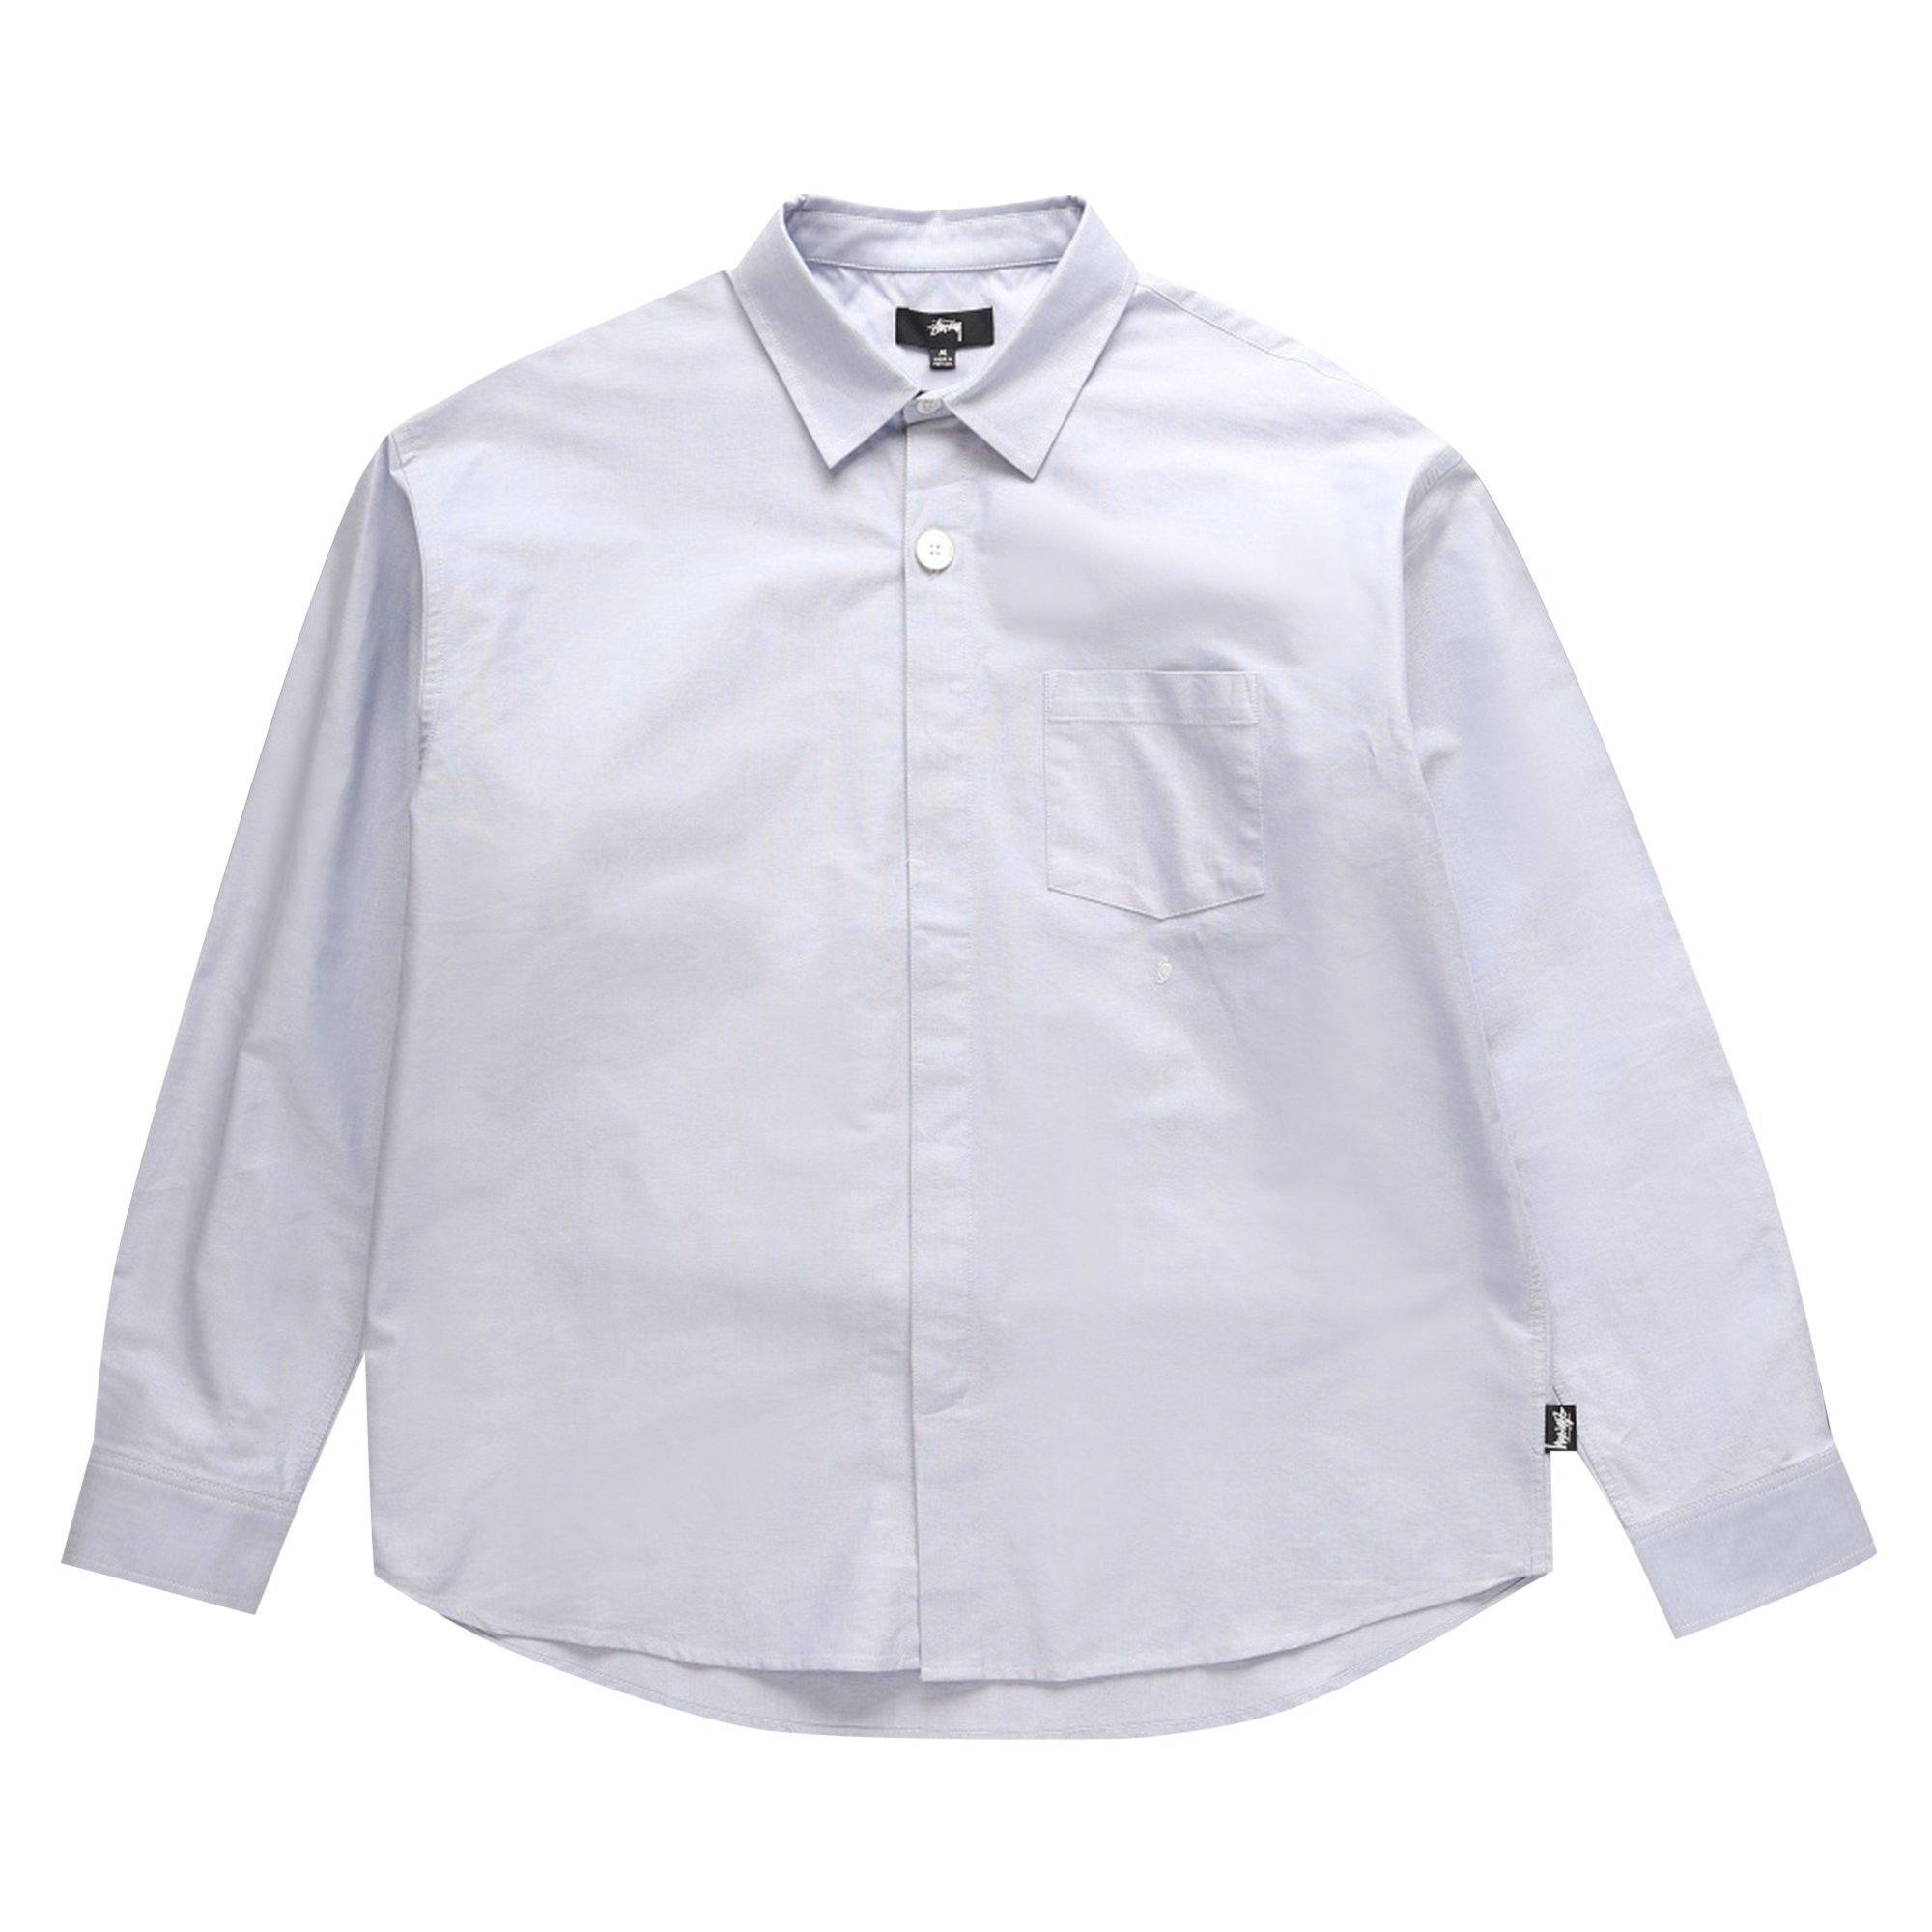 Buy Stussy Big Button Oxford Shirt 'Light Blue' - 1110205 LIGH | GOAT